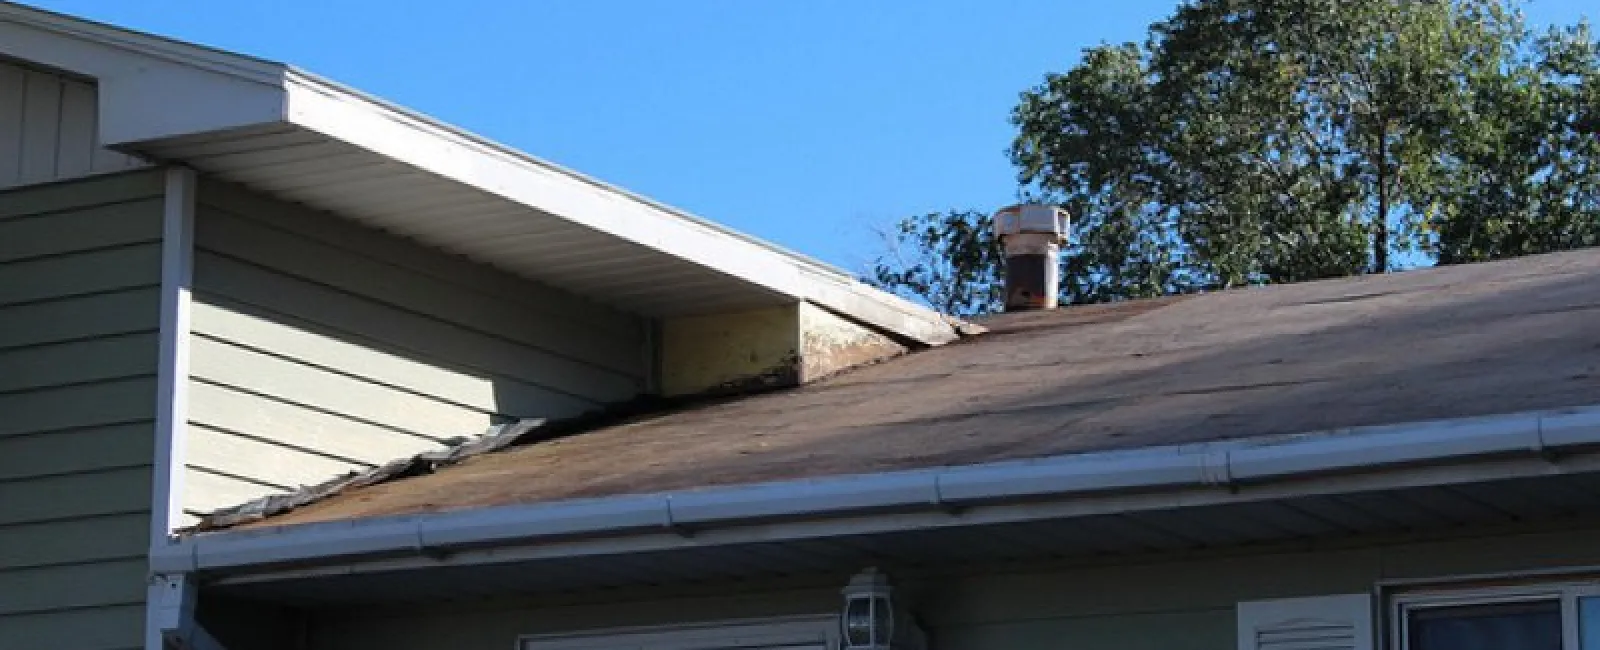 Roof Leaks: The Worst Case Scenario